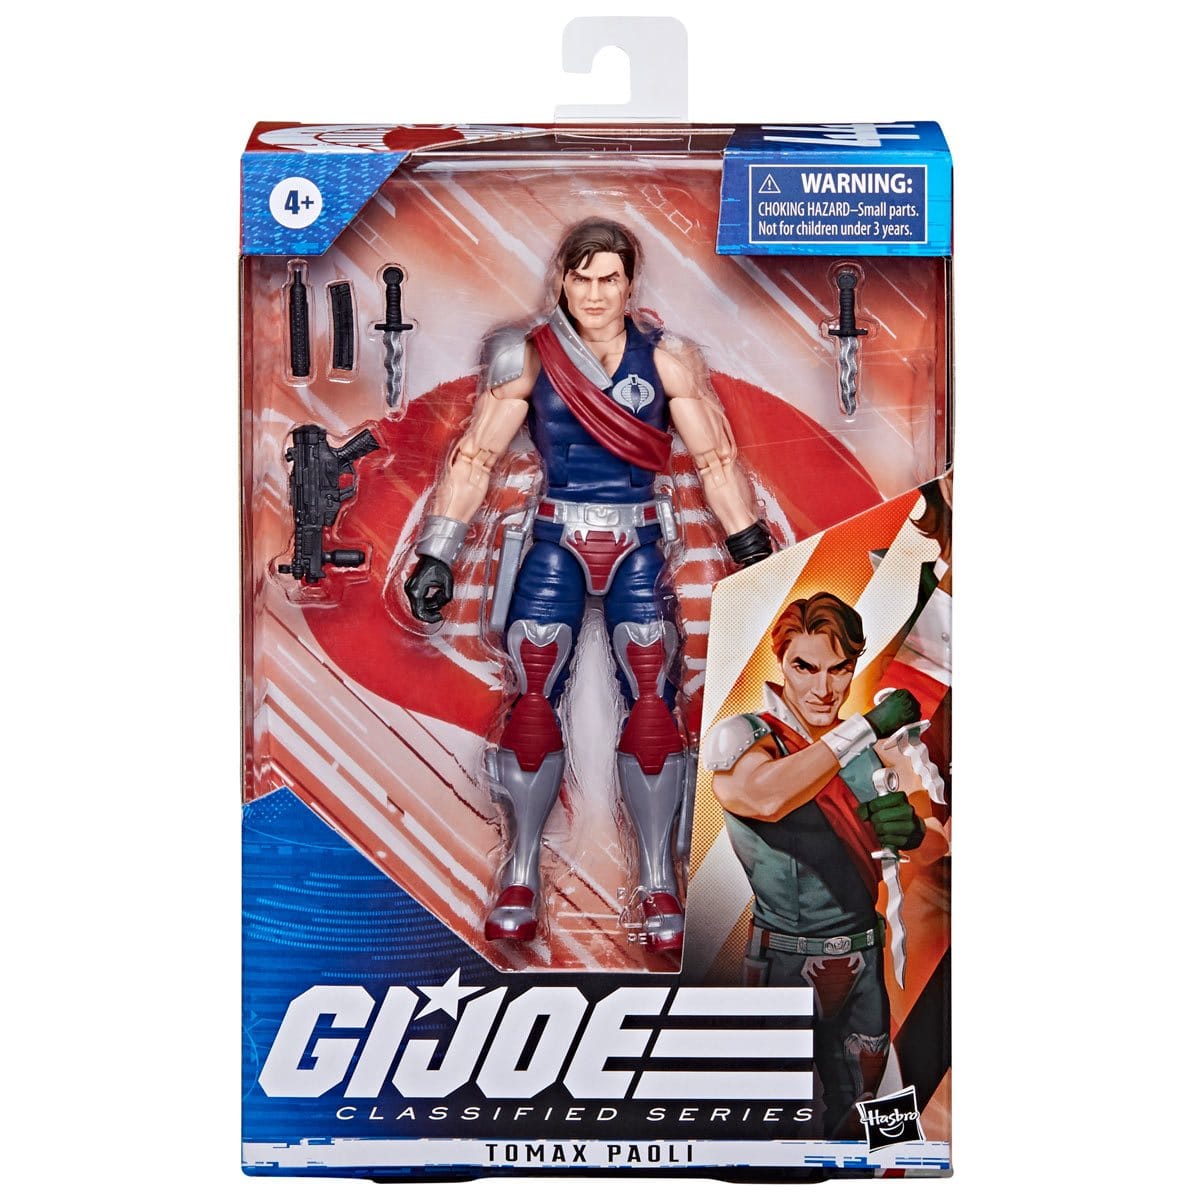 G.I. Joe Classified Series 6-Inch Tomax Paoli Action Figure Pop-O-Loco